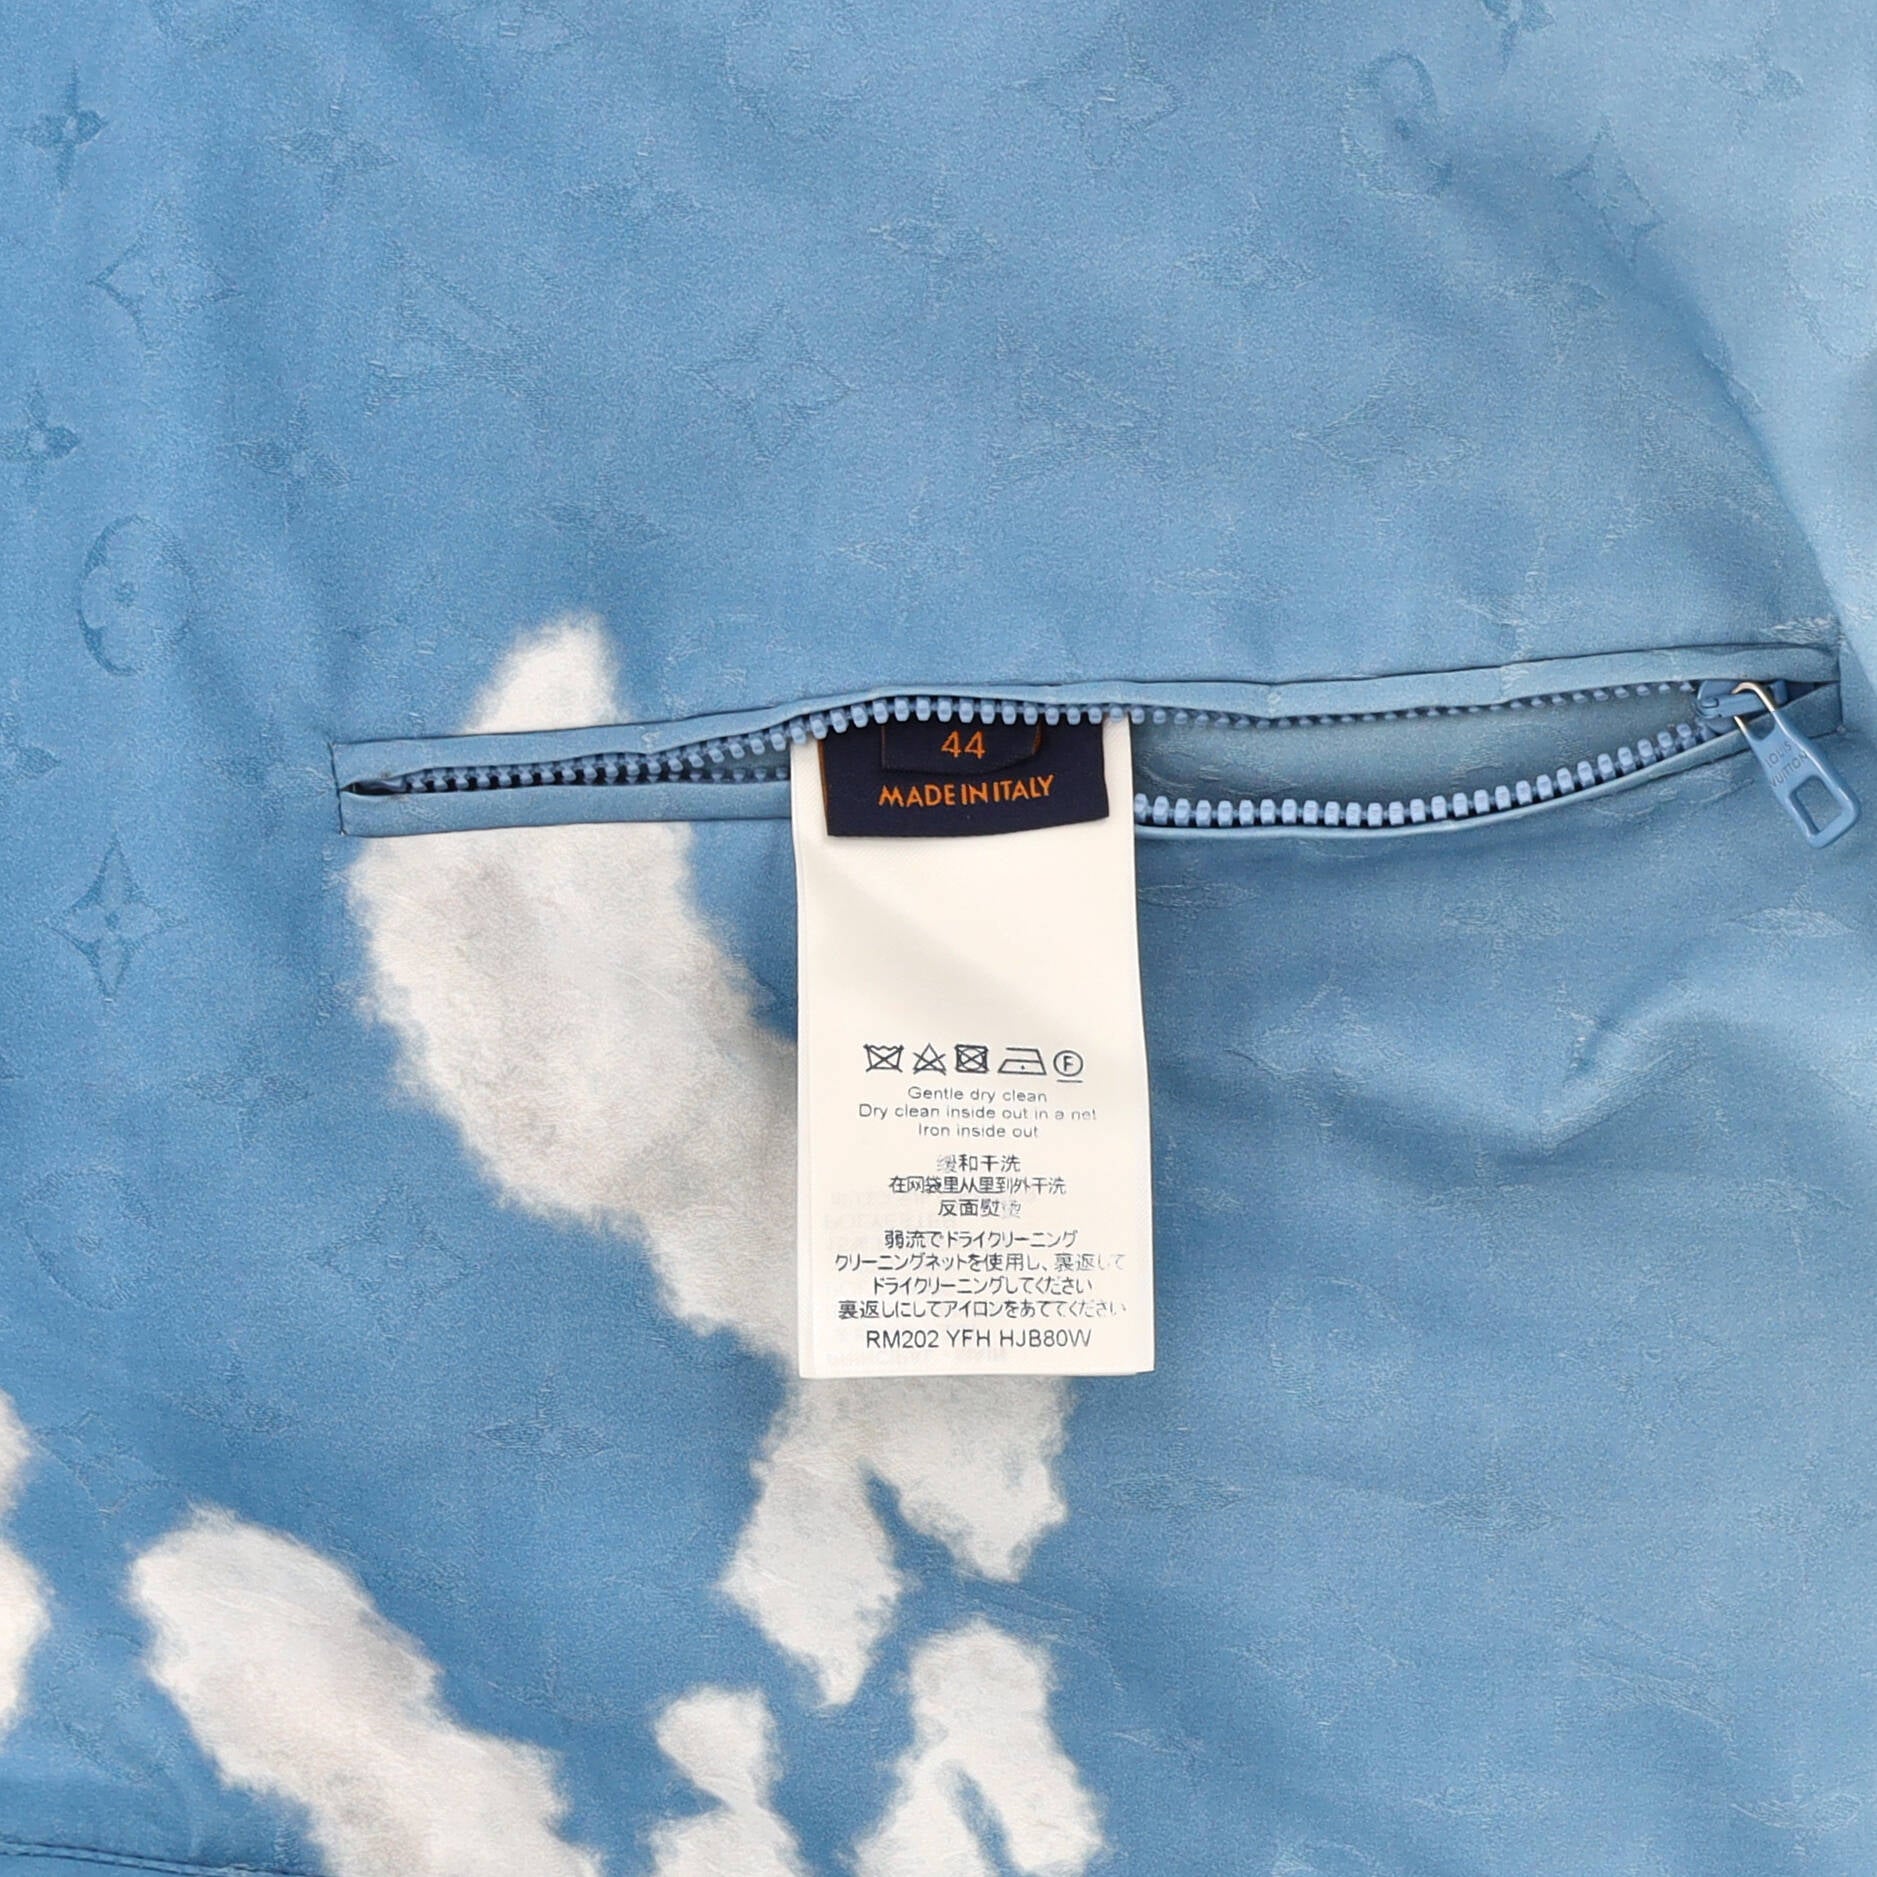 Louis Vuitton Blue Cloud Monogram Windbreaker